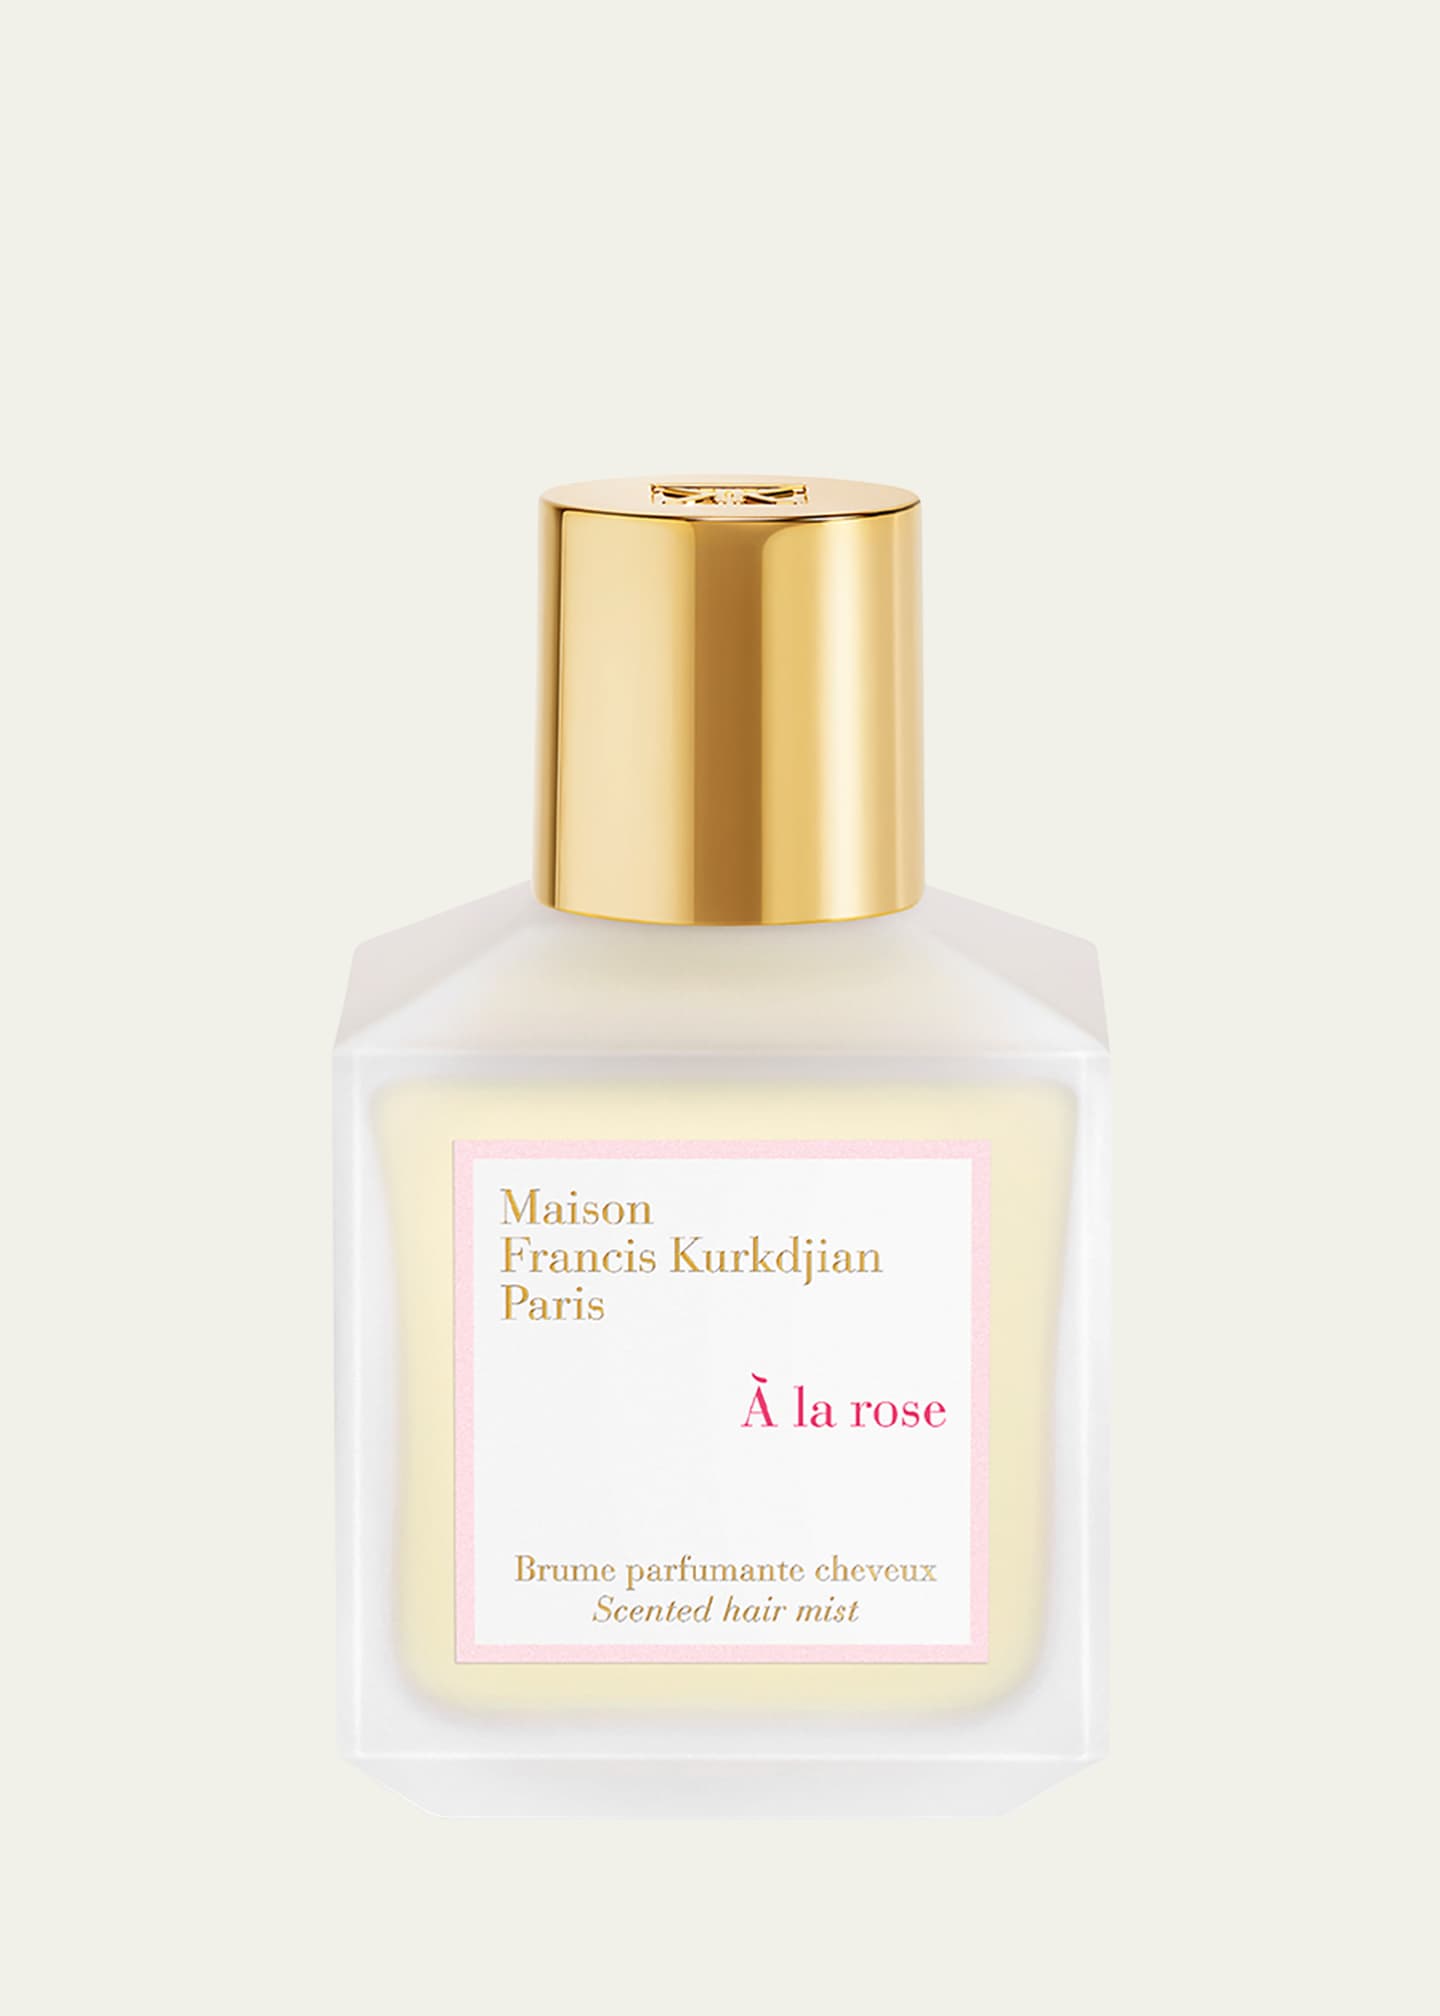 Maison Francis Kurkdjian A La Rose Scented Hair Mist 2.4 oz.